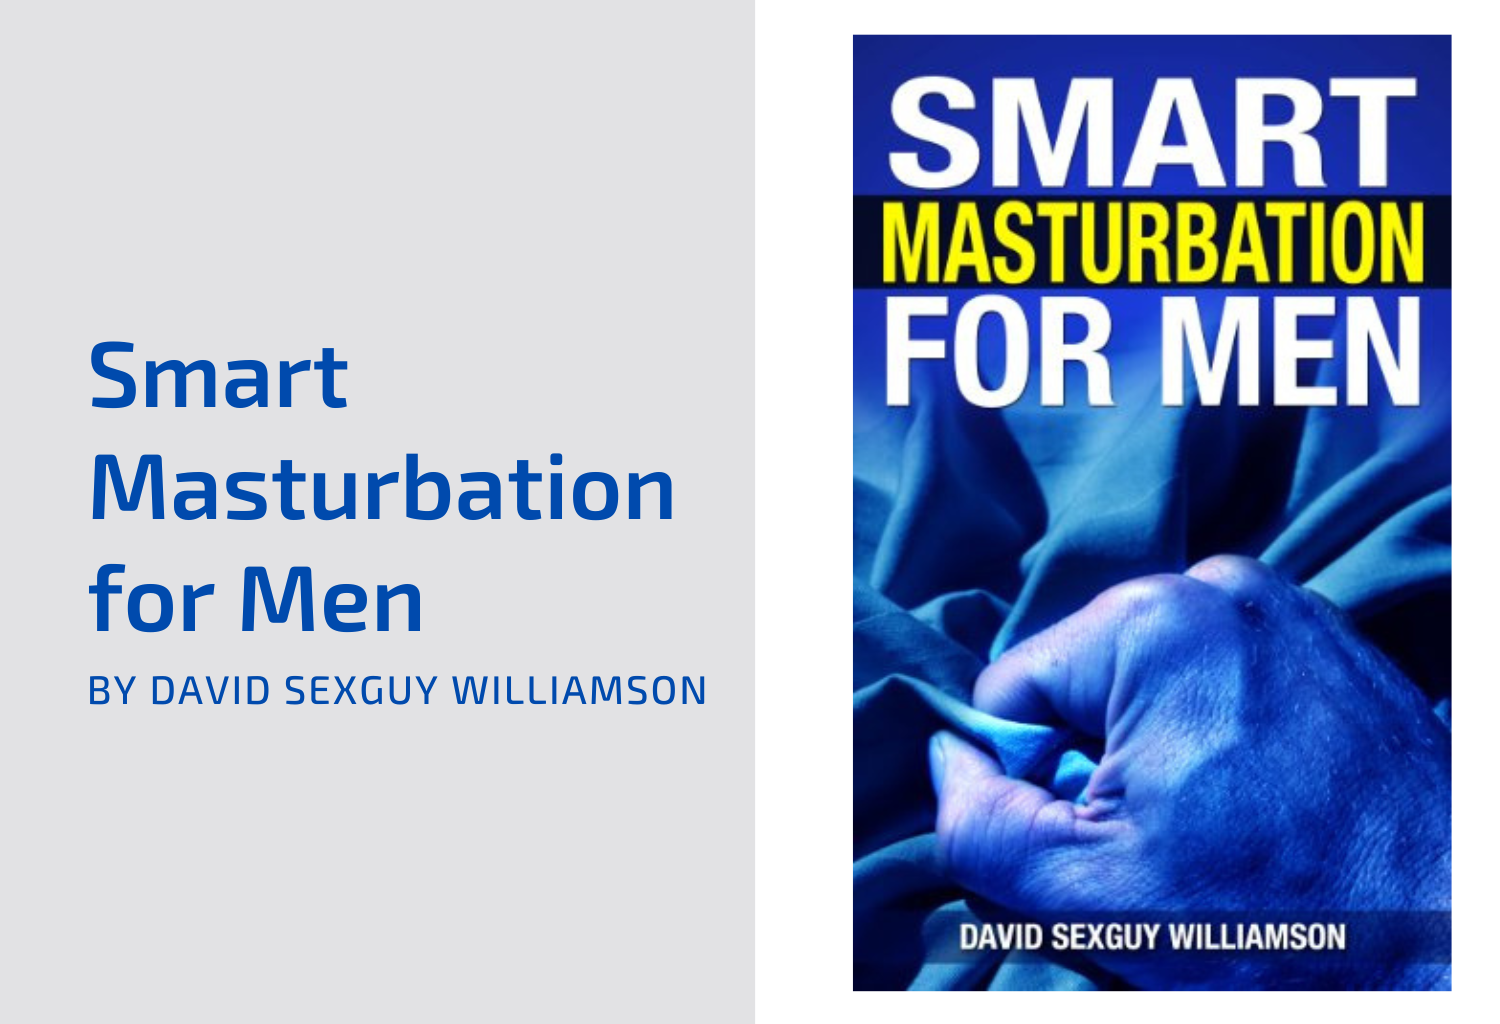 Smart Masturbation for Men by David Sexguy Williamson